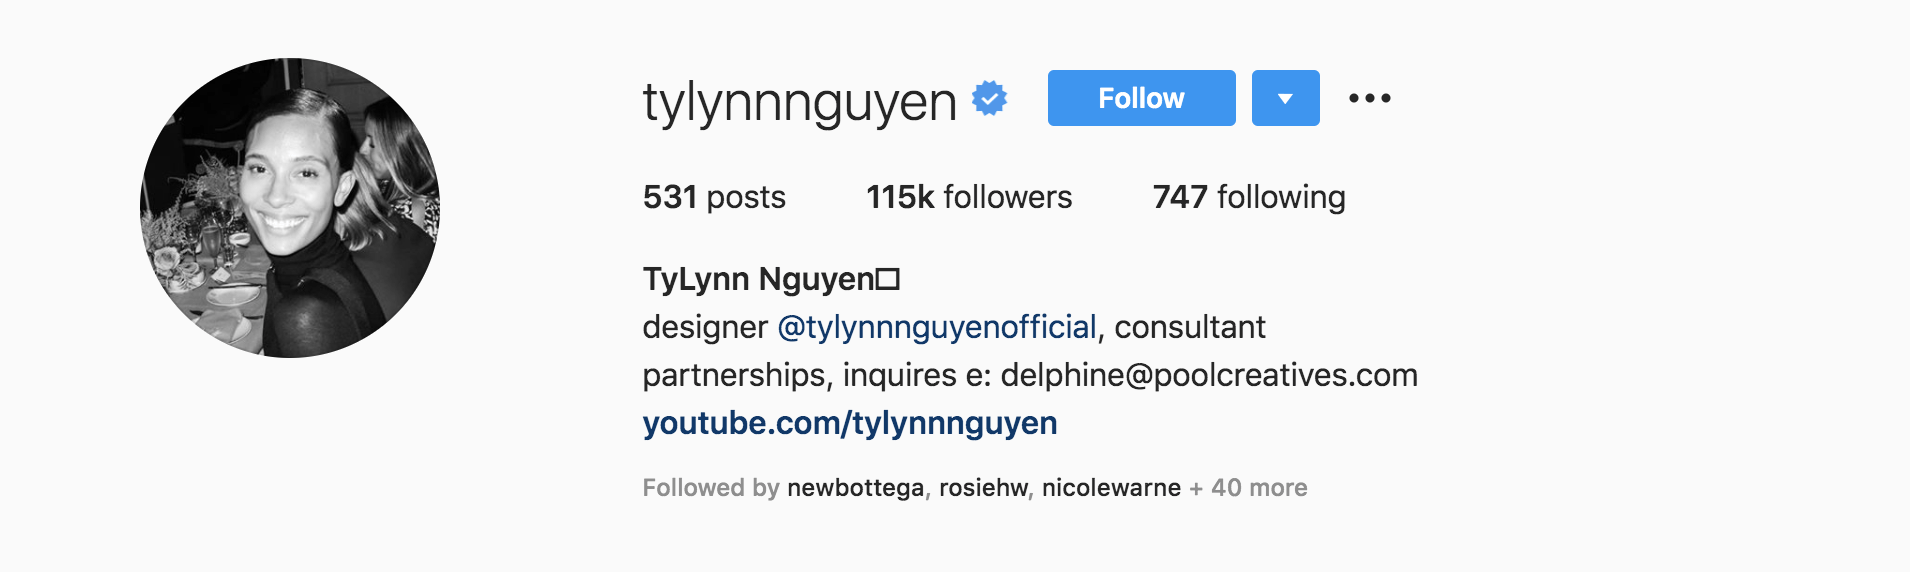 Top Fashion Influencers - TyLynn Nguyen